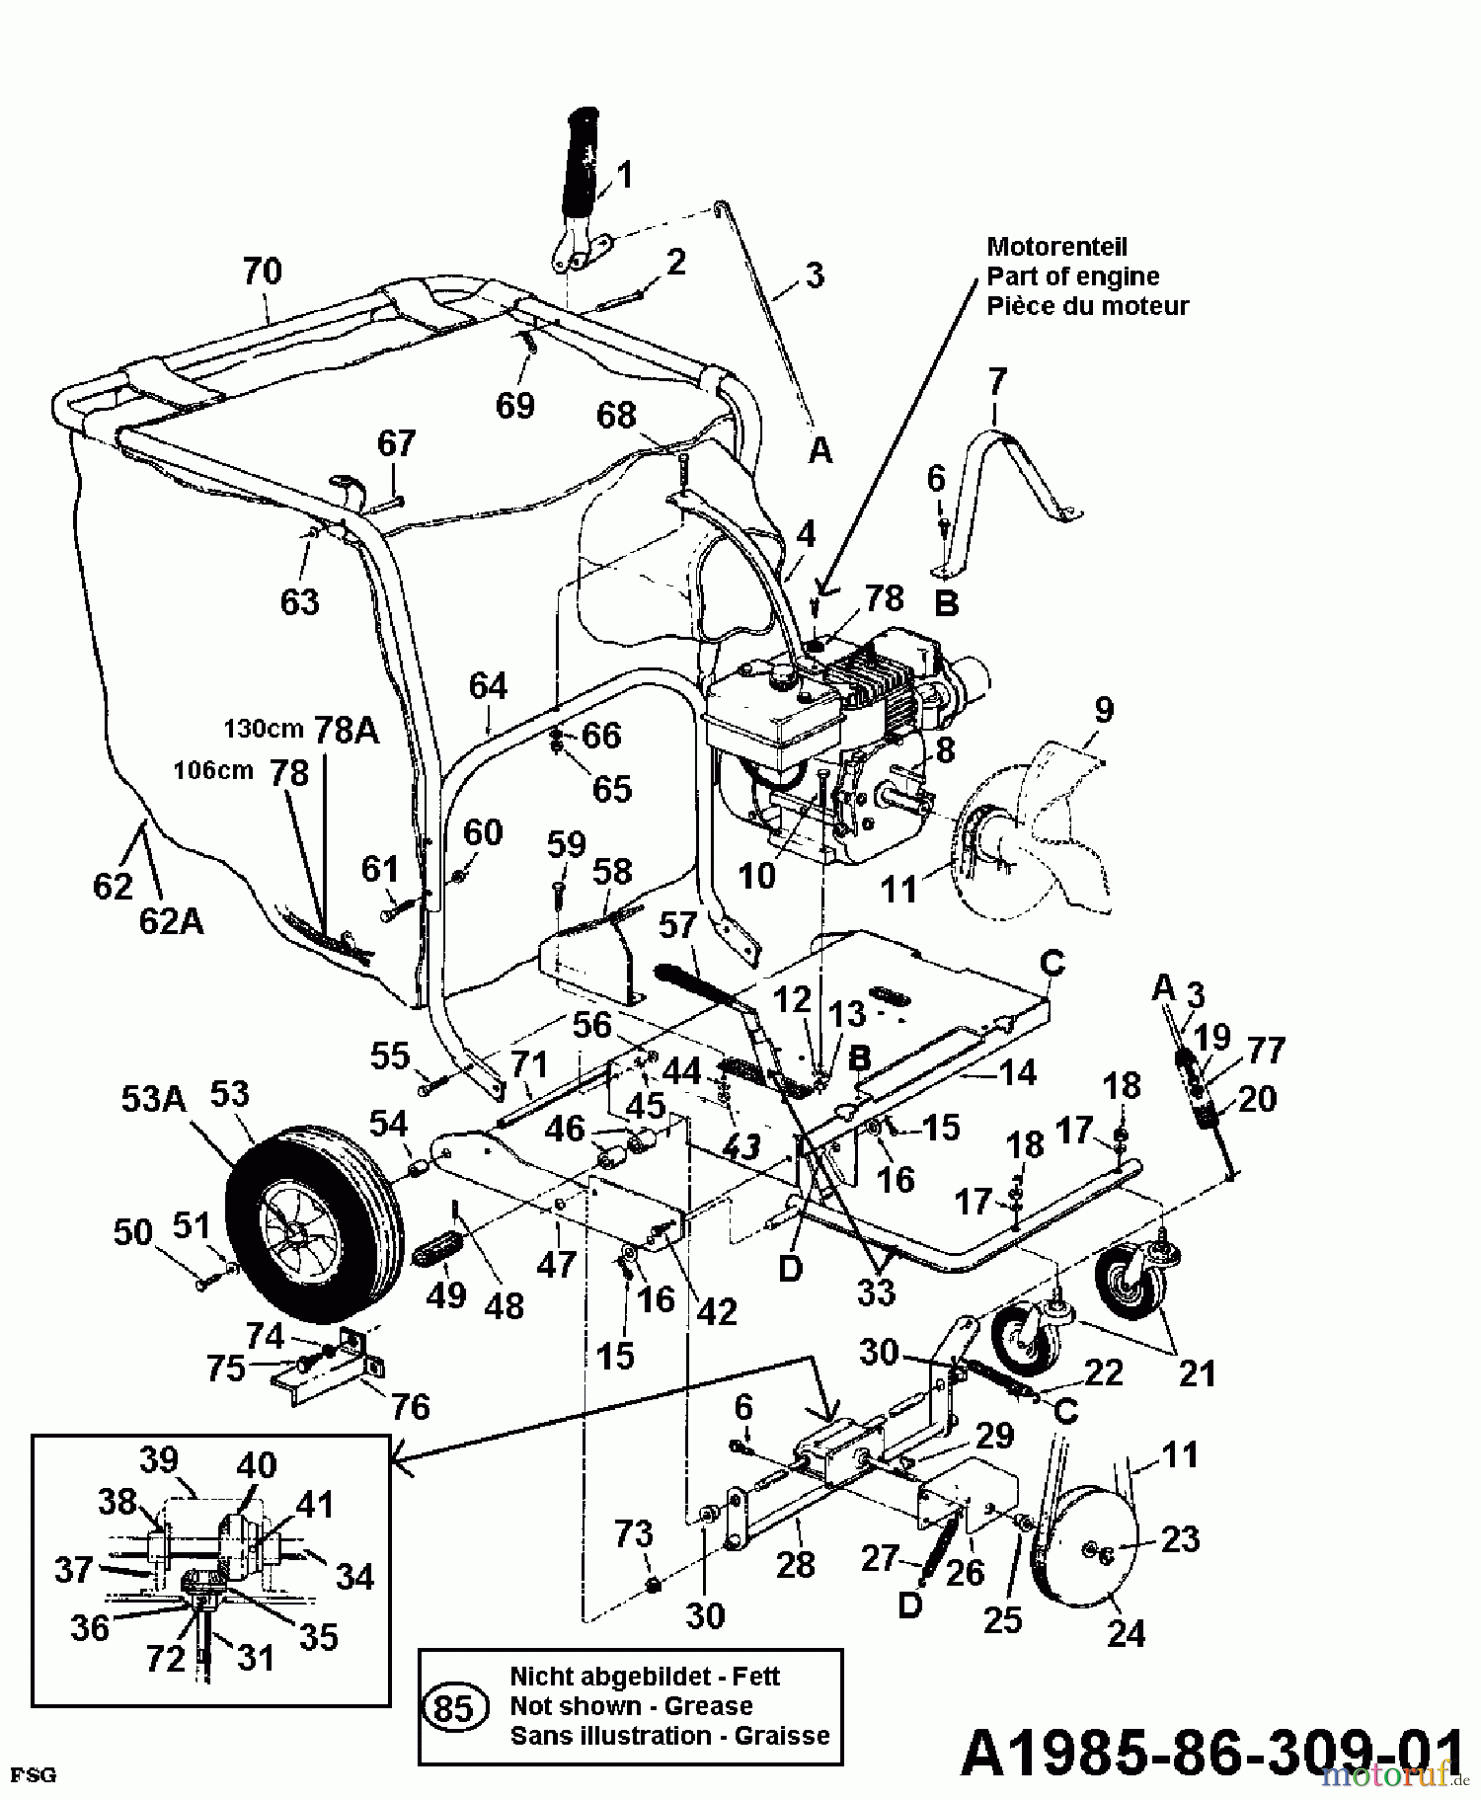  MTD Leaf blower, Blower vac 685 245-685-000  (1985) Basic machine